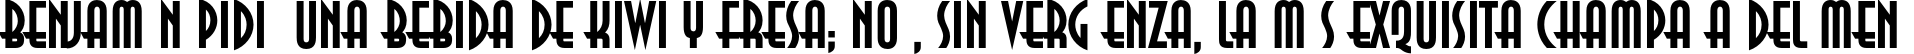 Пример написания шрифтом AnnaC Bold текста на испанском